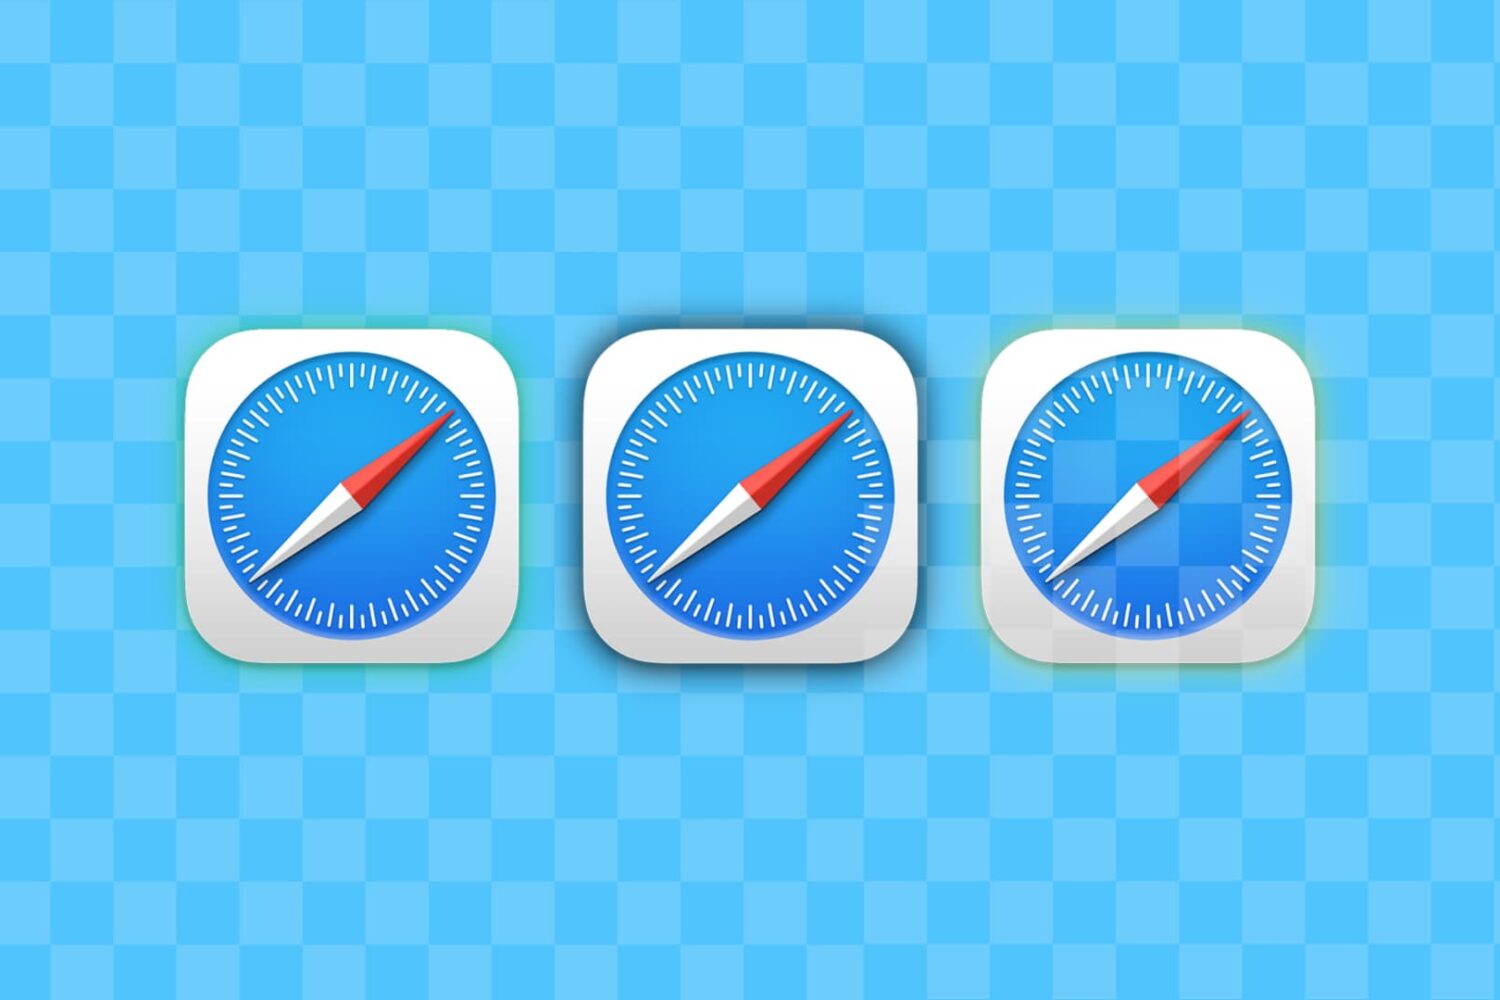 Three Safari icons on a blue background